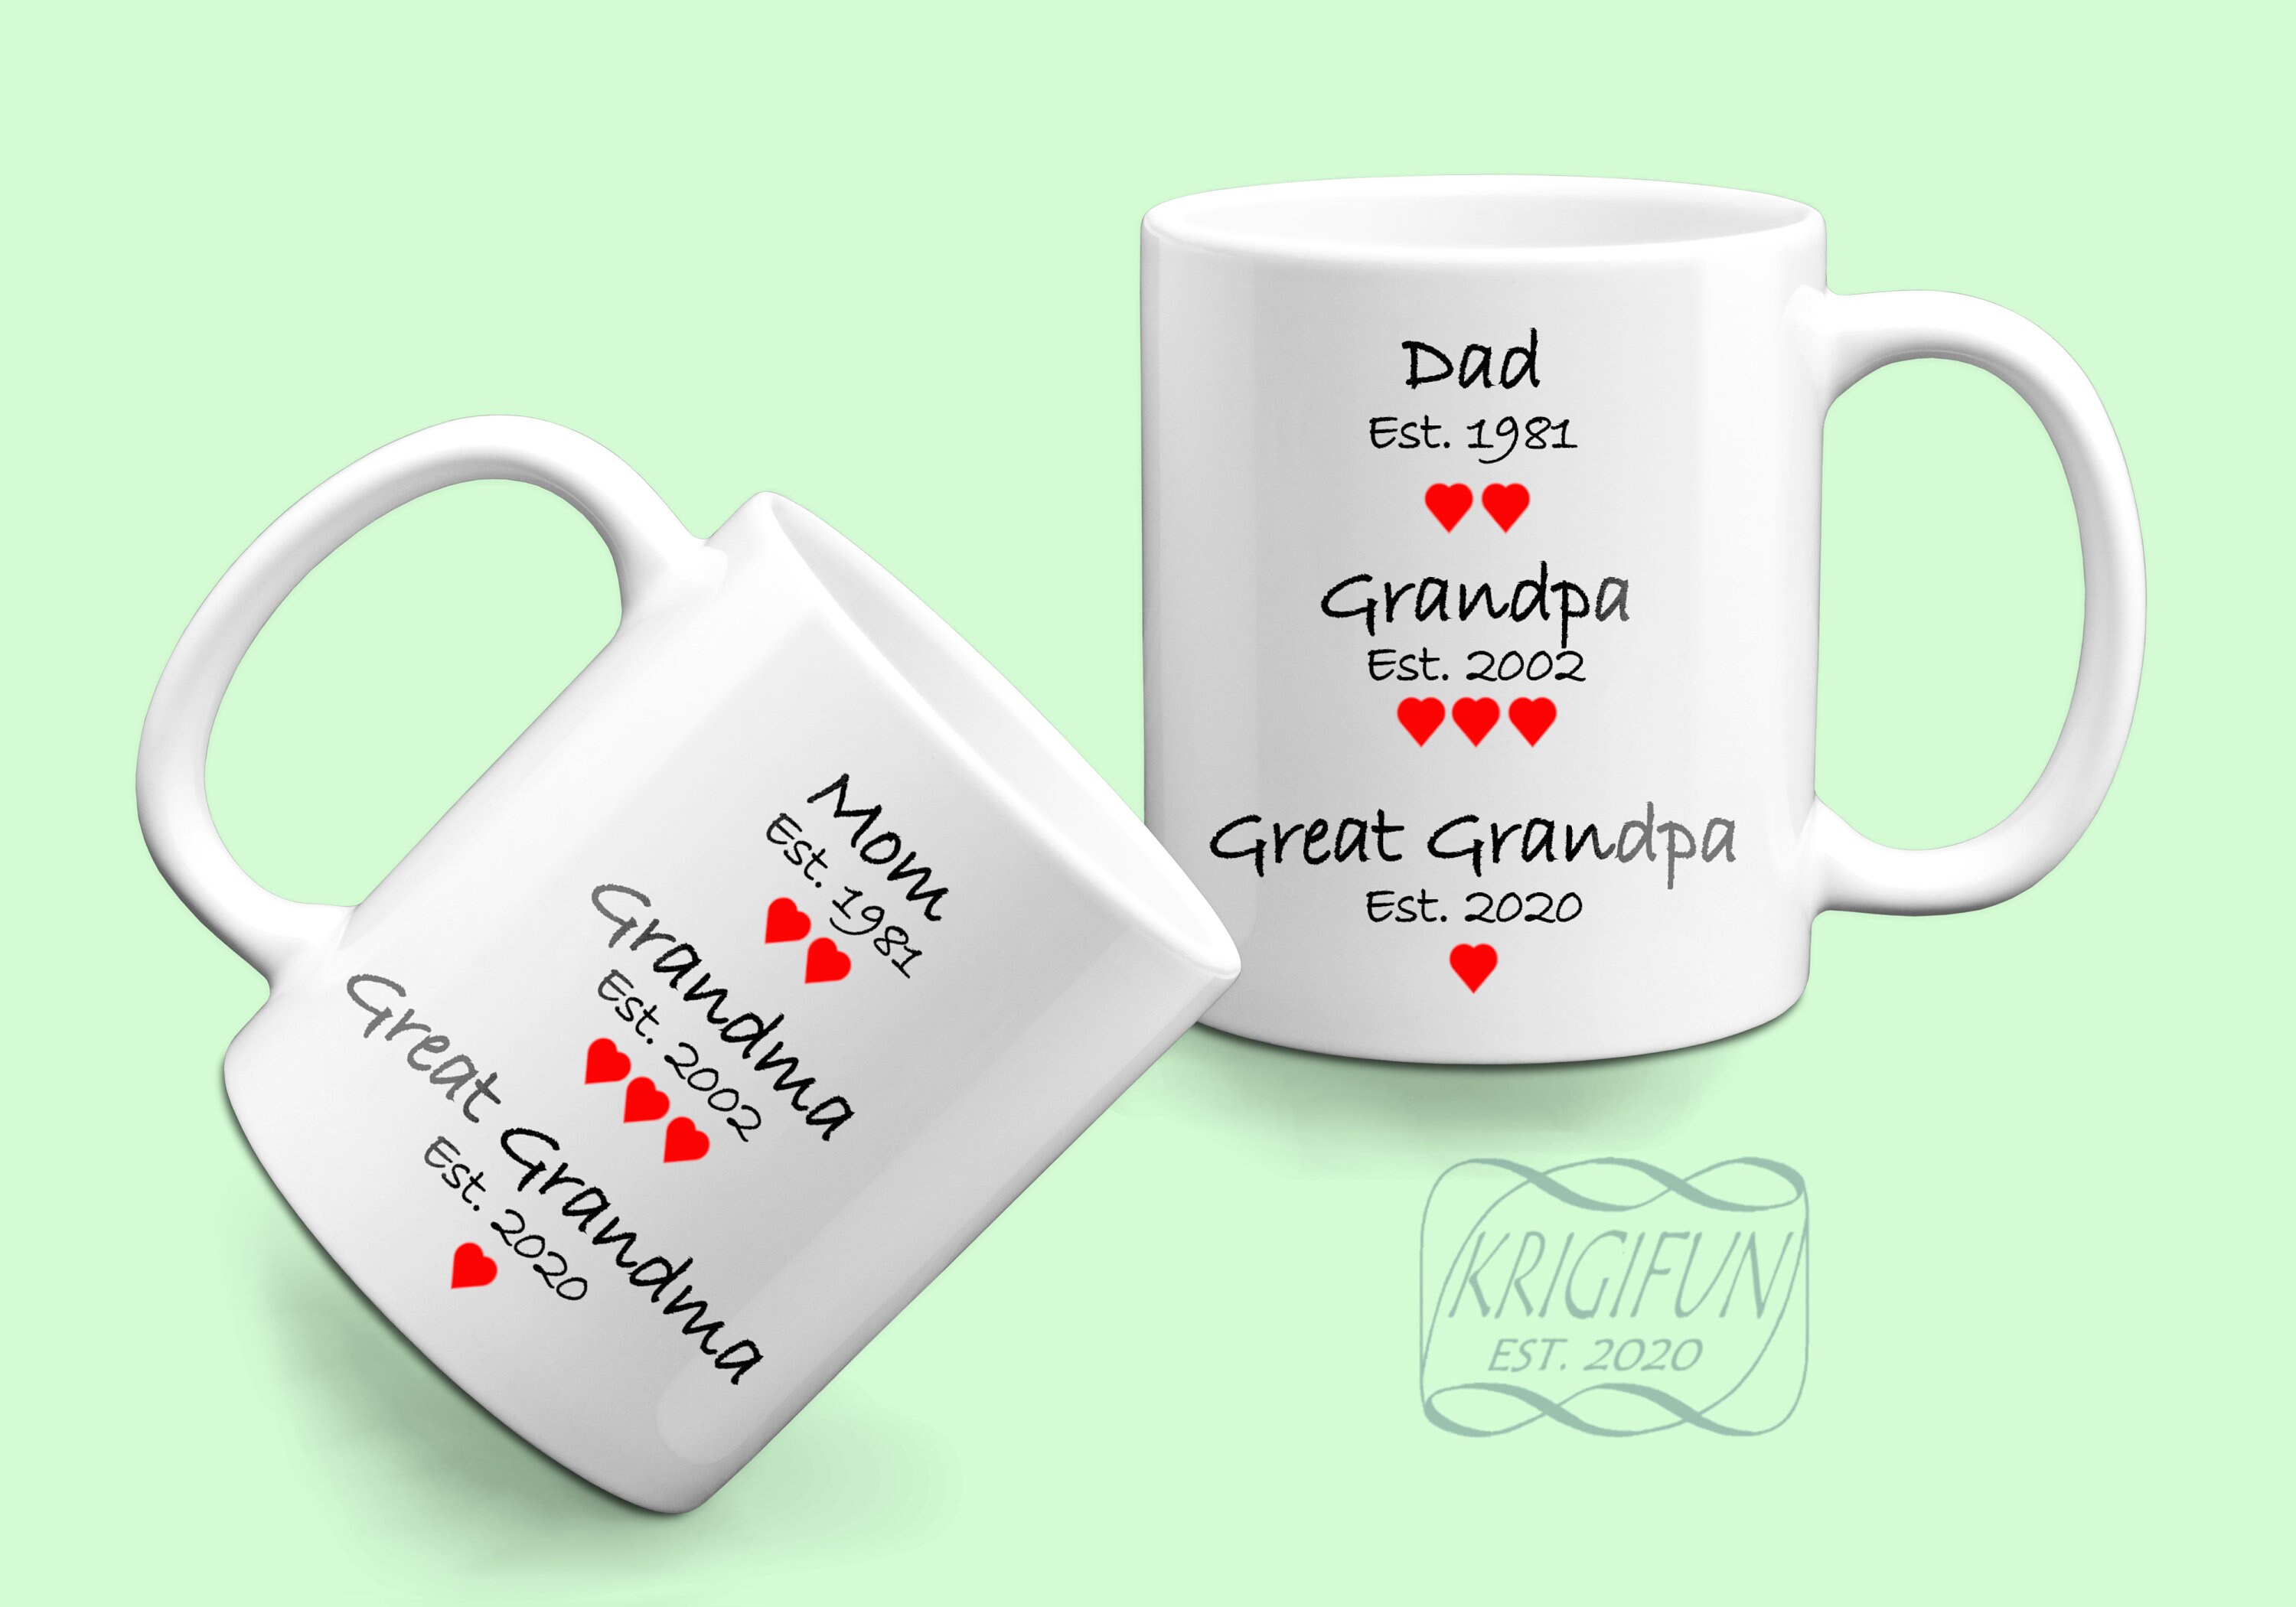 Cottage Creek Grandma Grandpa Mugs, Set of Two 16oz. Ceramic Coffee Mugs,  Grandparent Gifts, Grandma Mug, Grandpa Mug 